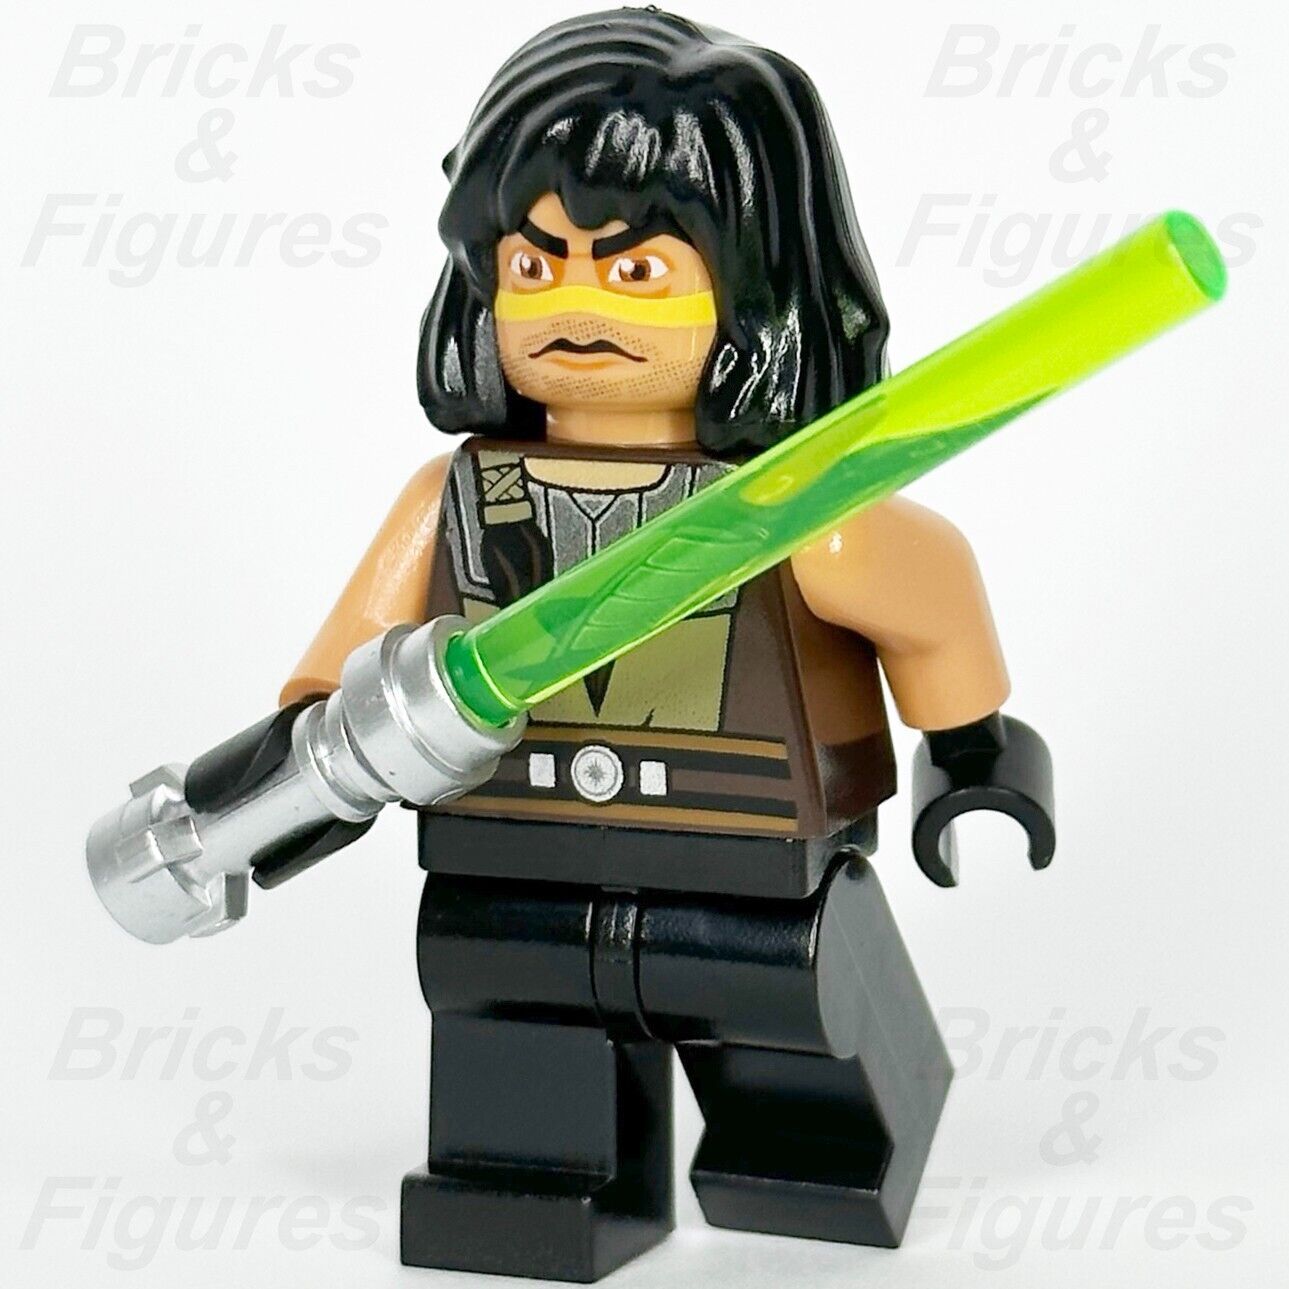 LEGO Star Wars Quinlan Vos Minifigure Jedi Knight The Clone Wars 7964 sw0333 1